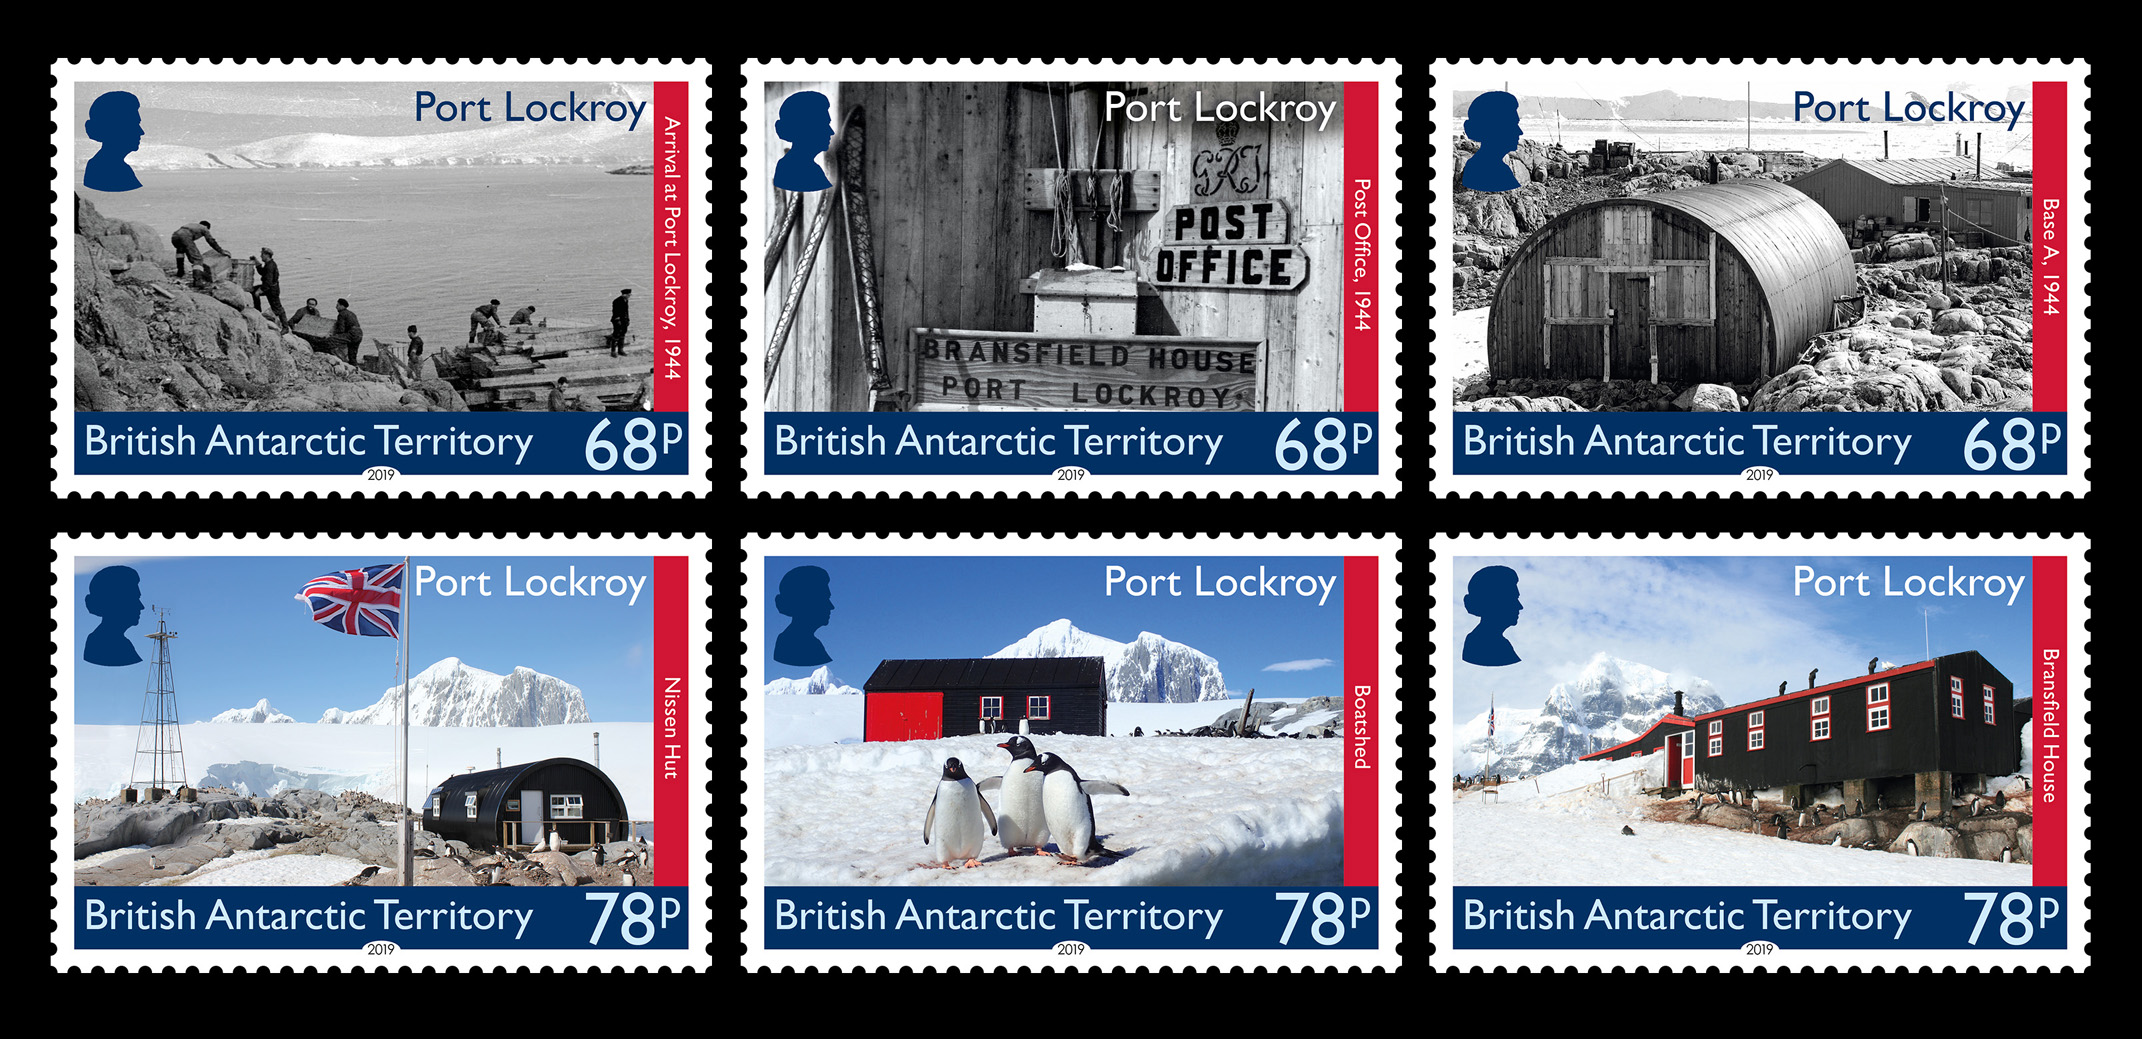 2019 Stamp Set: Port Lockroy - British Antarctic Territory